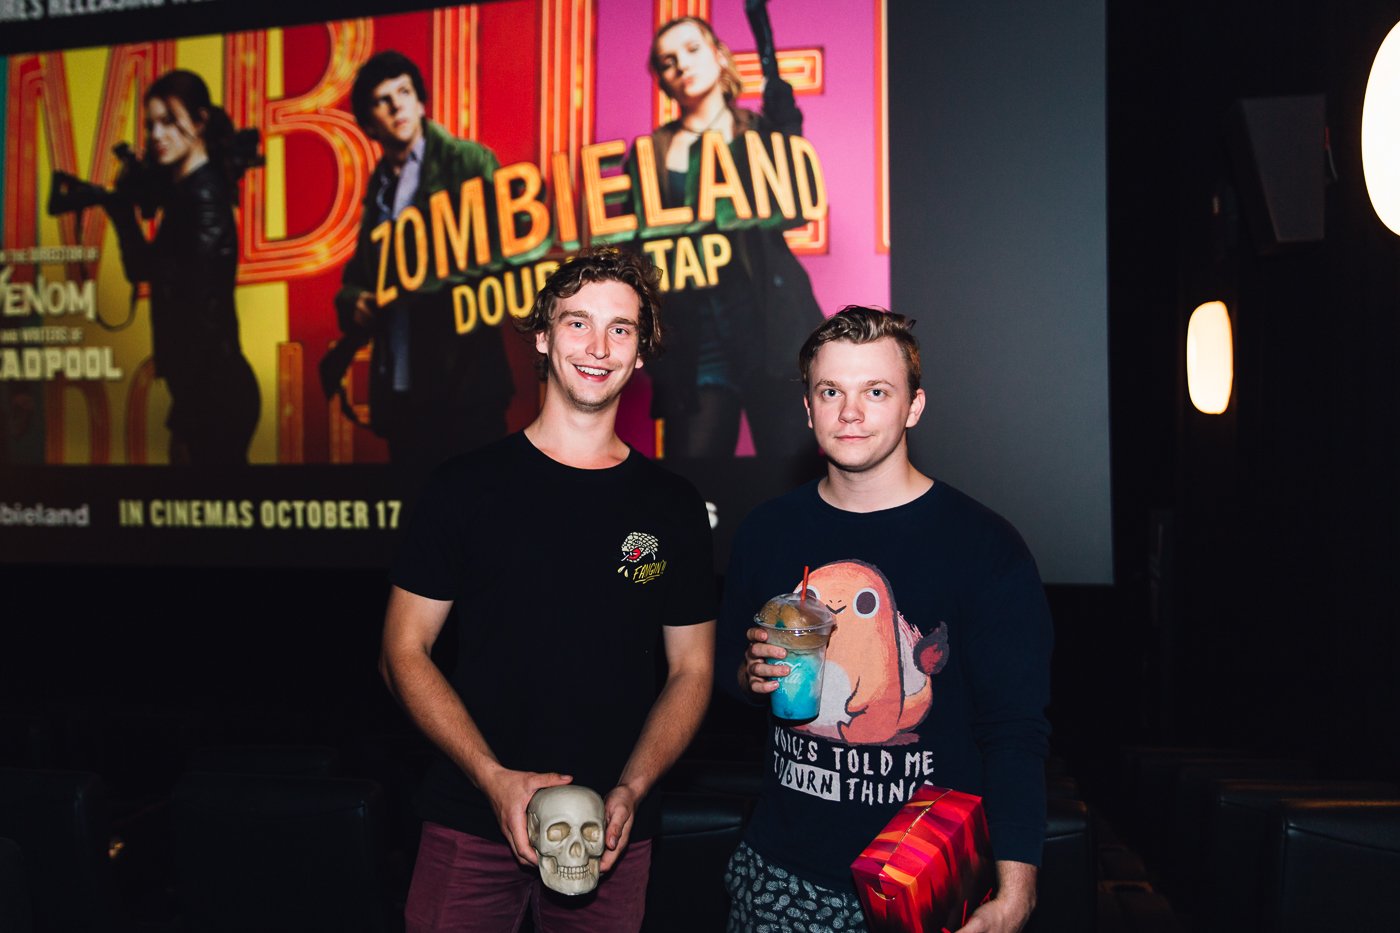 TWE’s screening of Zombieland: Double Tap